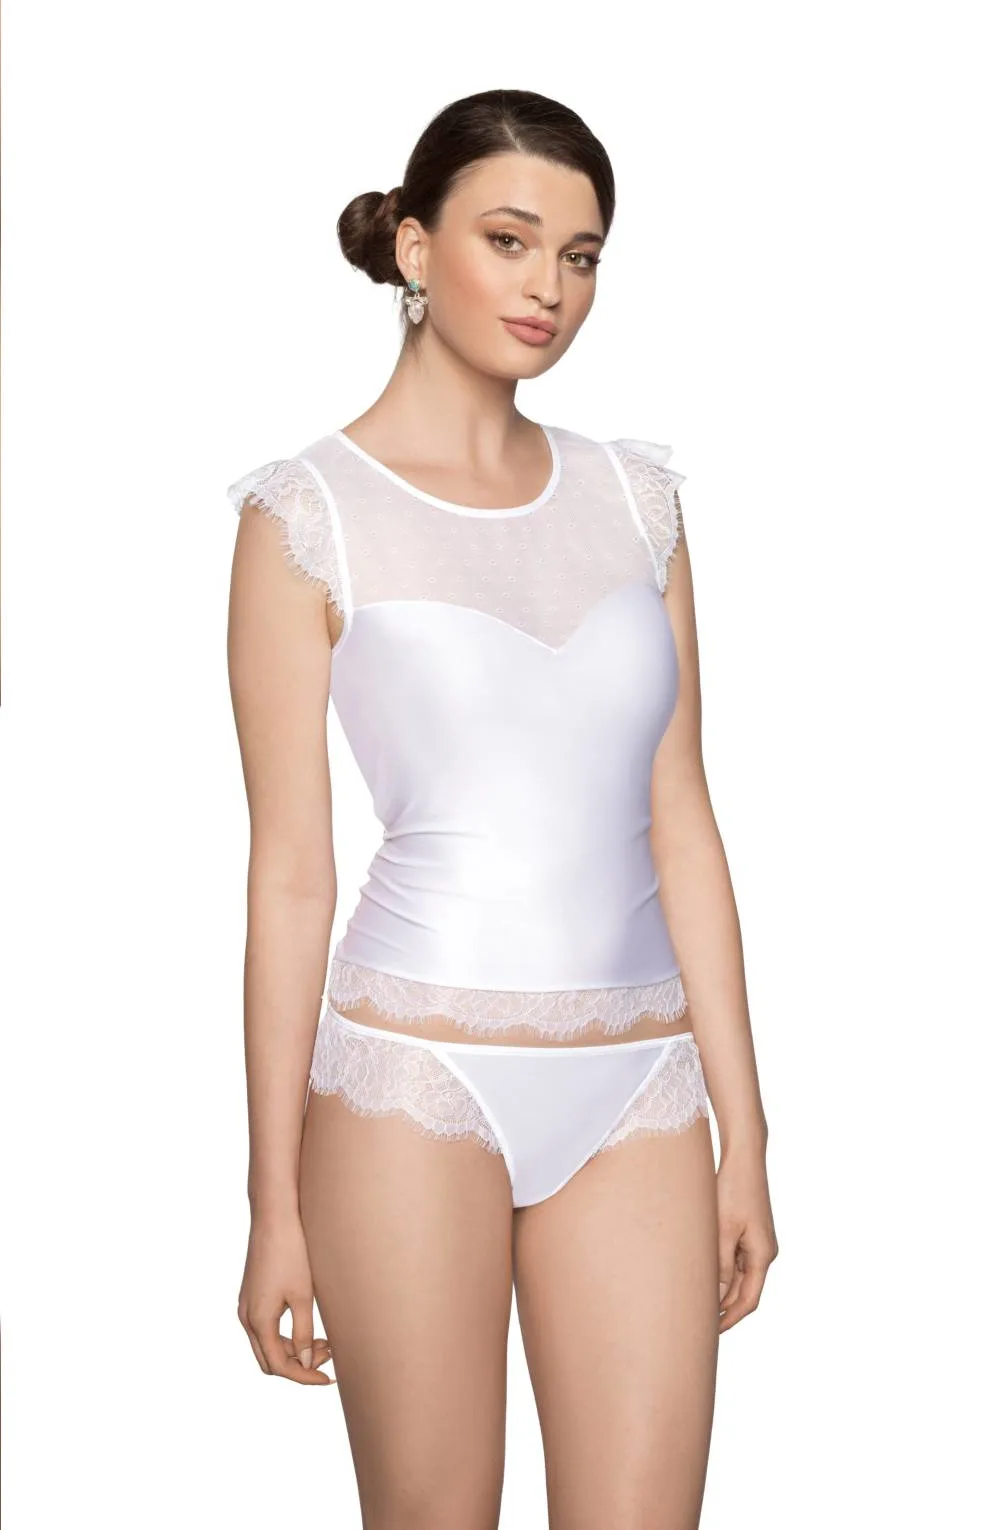 Roza Erii Soft Lace Shirt - White (Ideal for Everyday & Bridal)